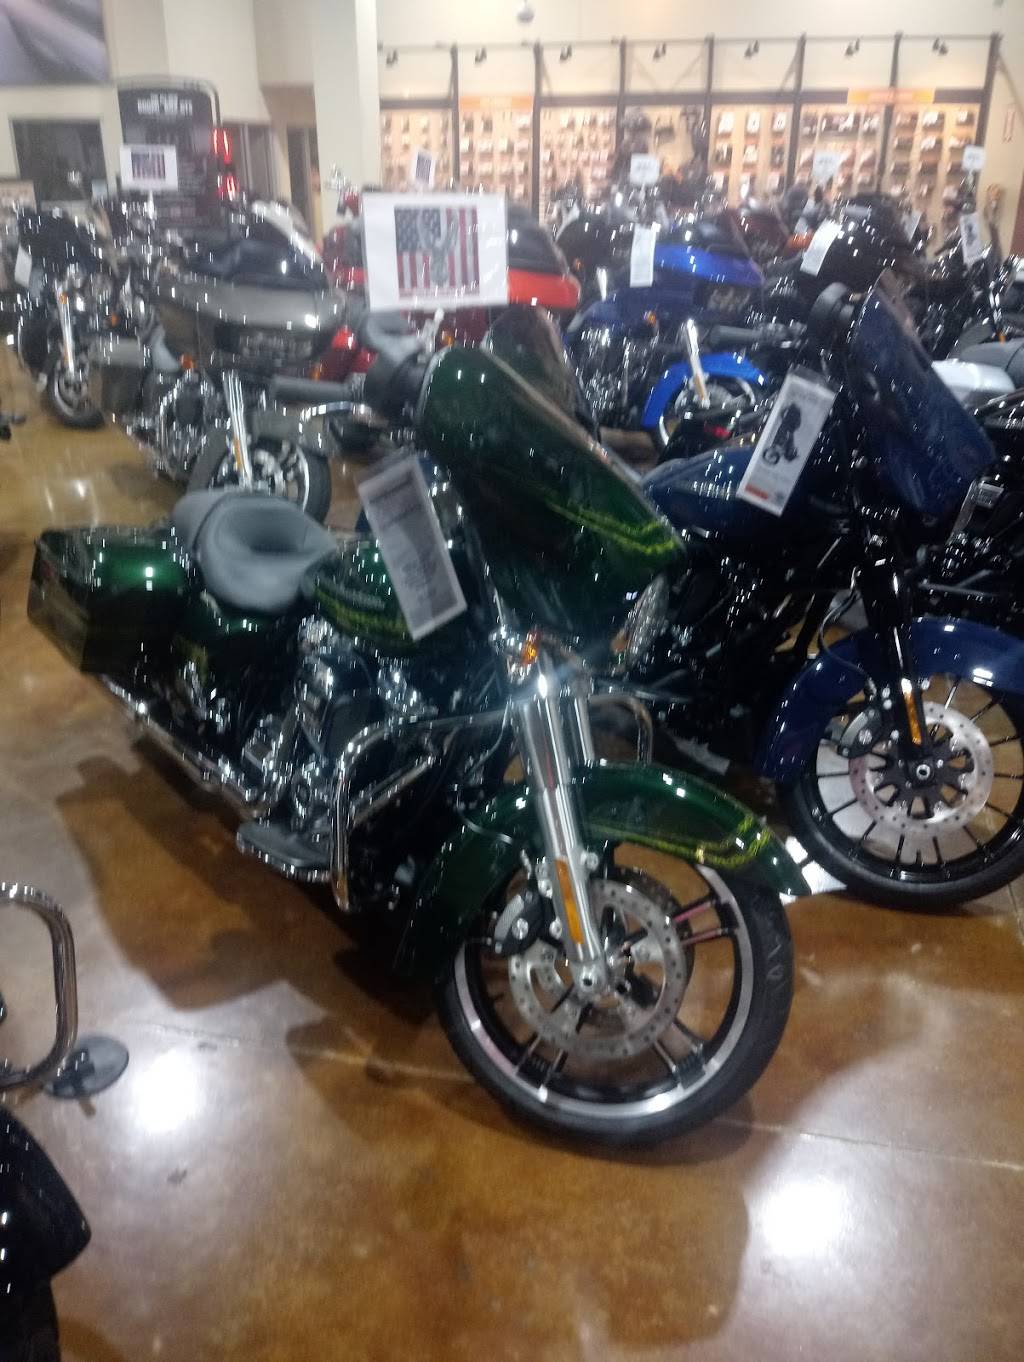 Steel Horse Harley-Davidson | 11501 Hull Street Rd, Midlothian, VA 23112, USA | Phone: (804) 639-1737